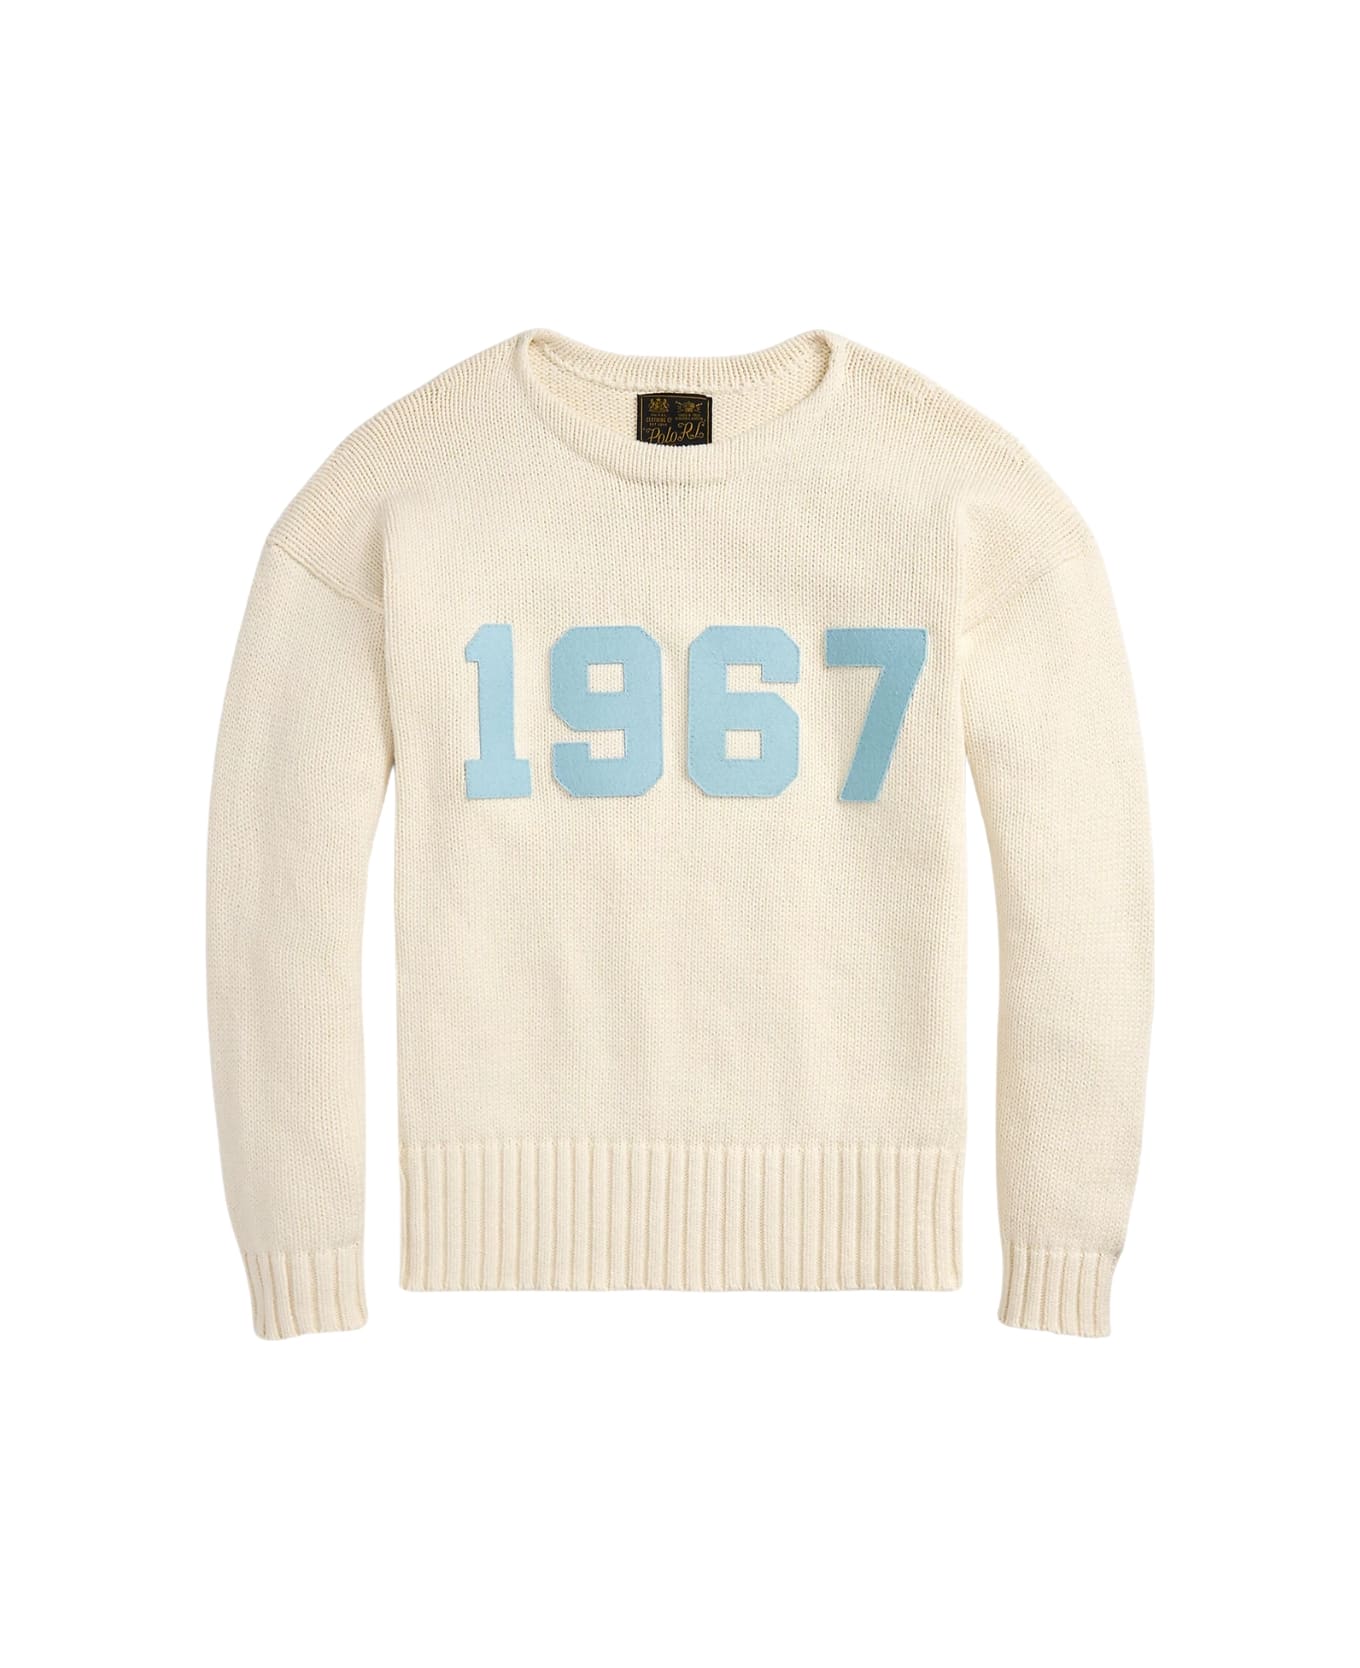 Polo Ralph Lauren Crew Neck Sweater - Cream Combo